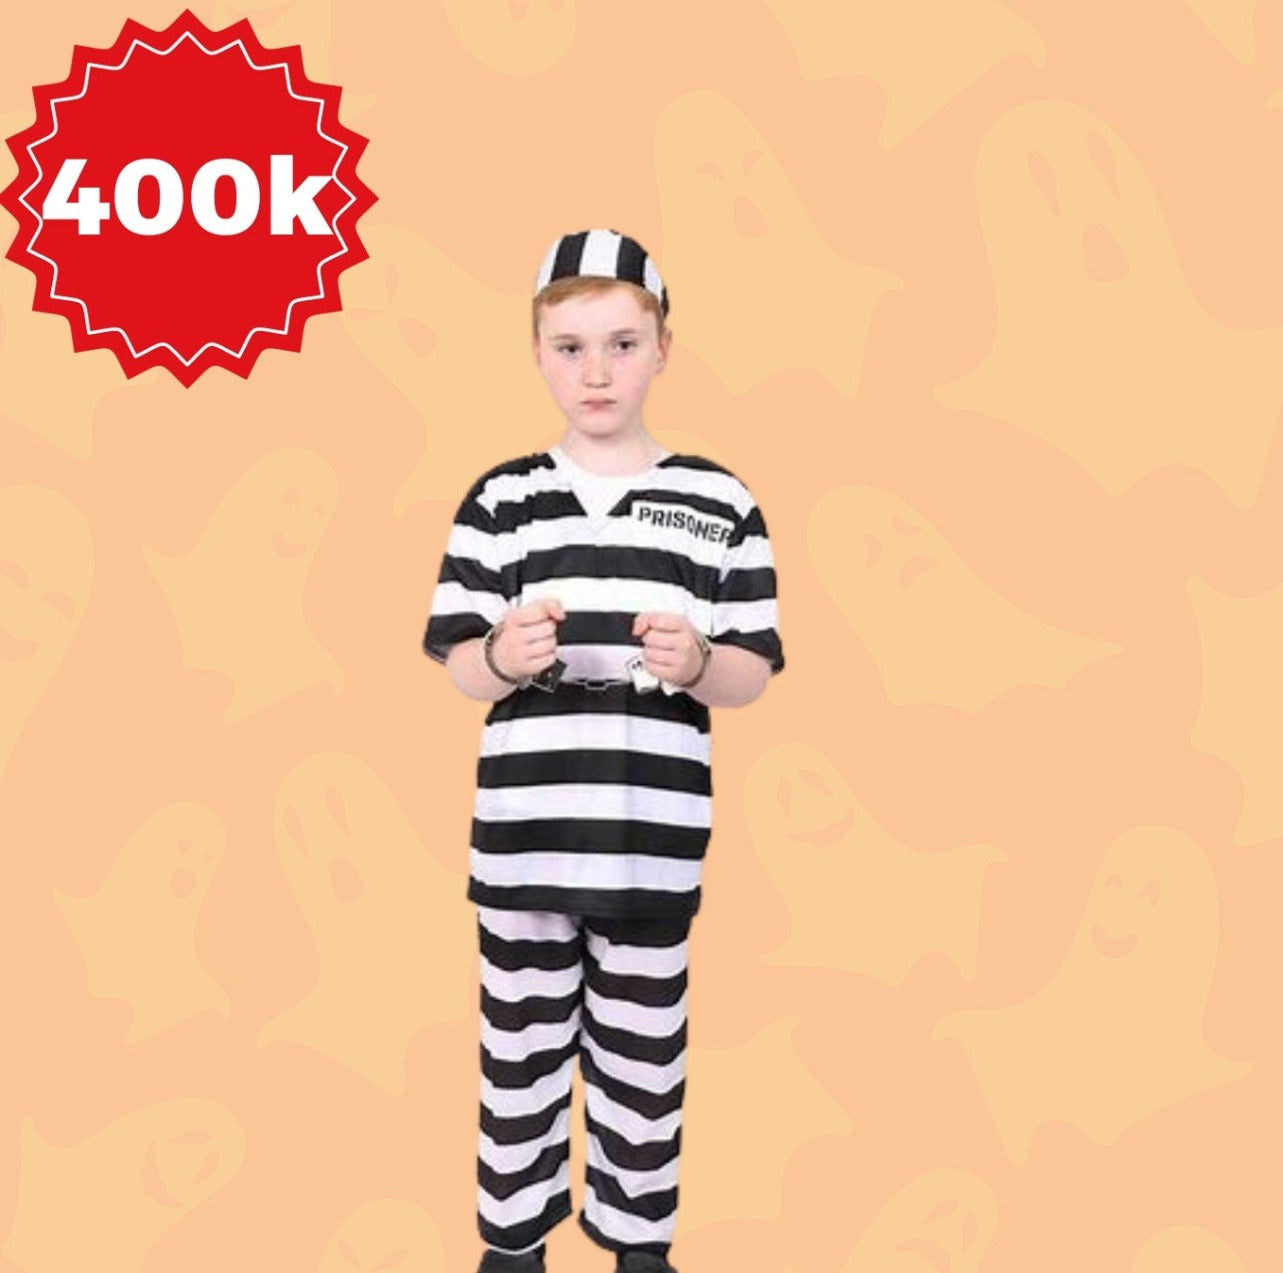 Prisoner Striped Costume